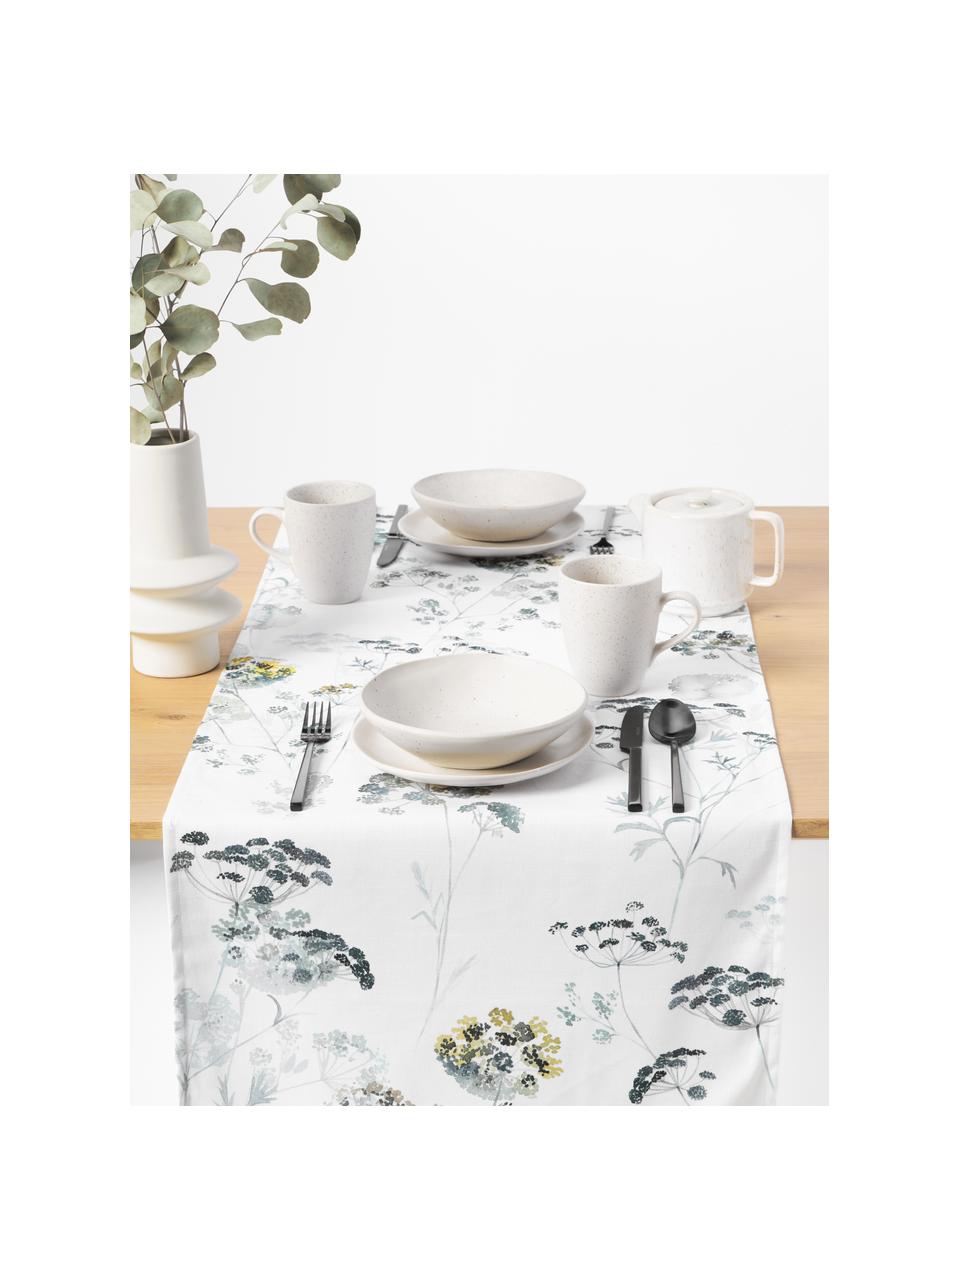 Chemin de table avec motif floral Aquarell Print, 100 % coton, Blanc, tons verts, larg. 50 x long. 160 cm